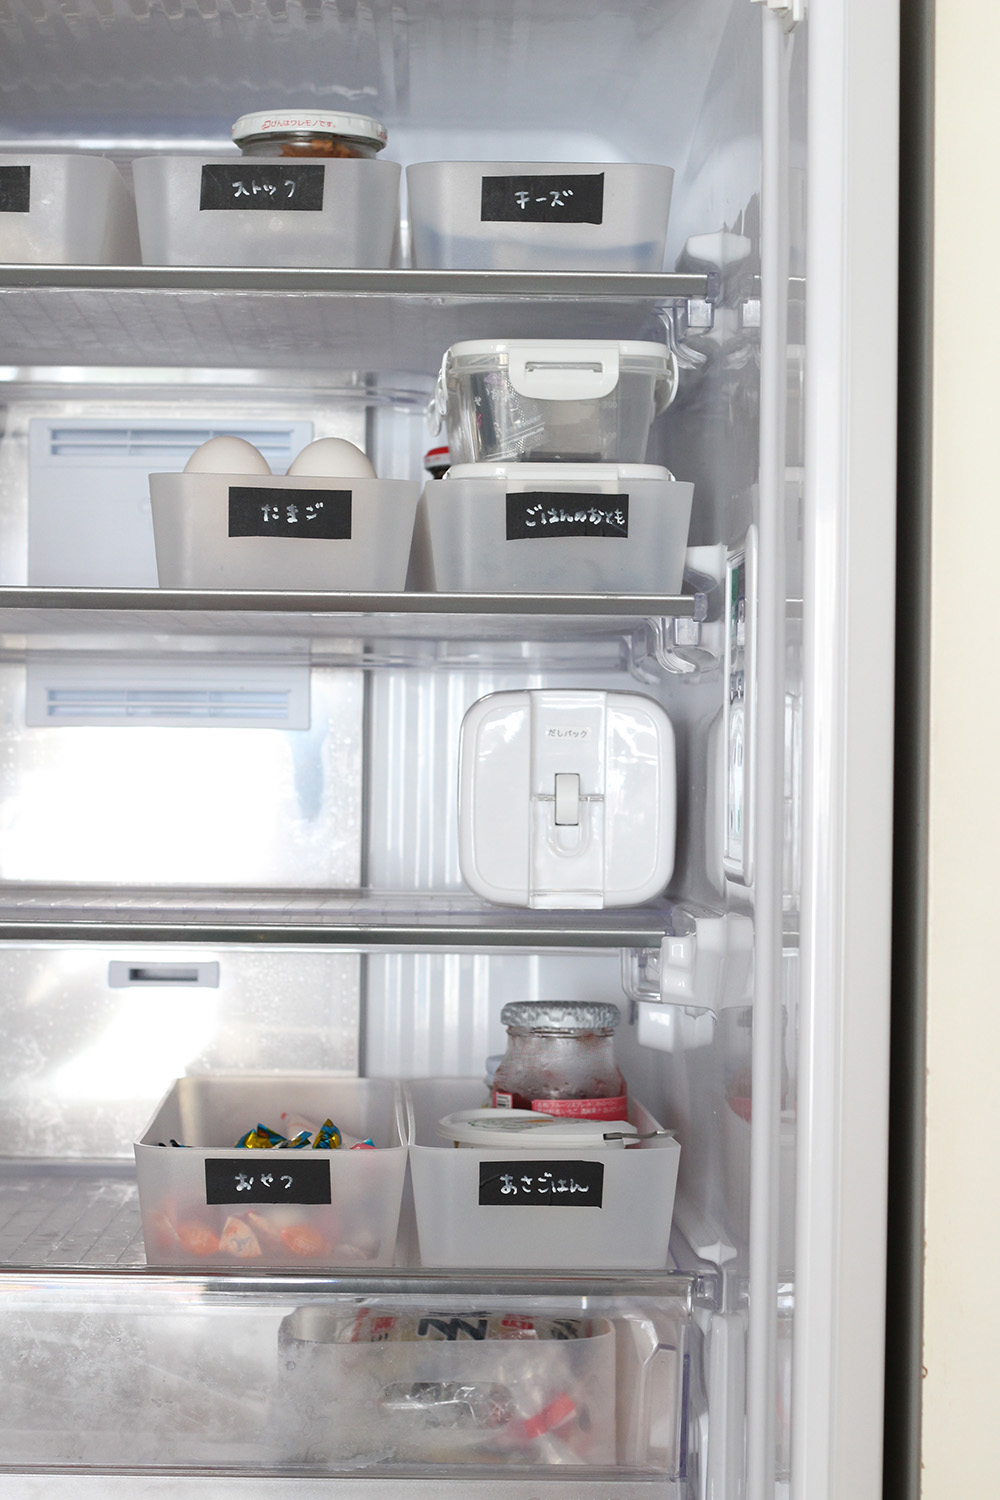 Limia掲載のお知らせ 無印 100均で冷蔵庫整理 楽しい暮らしnote